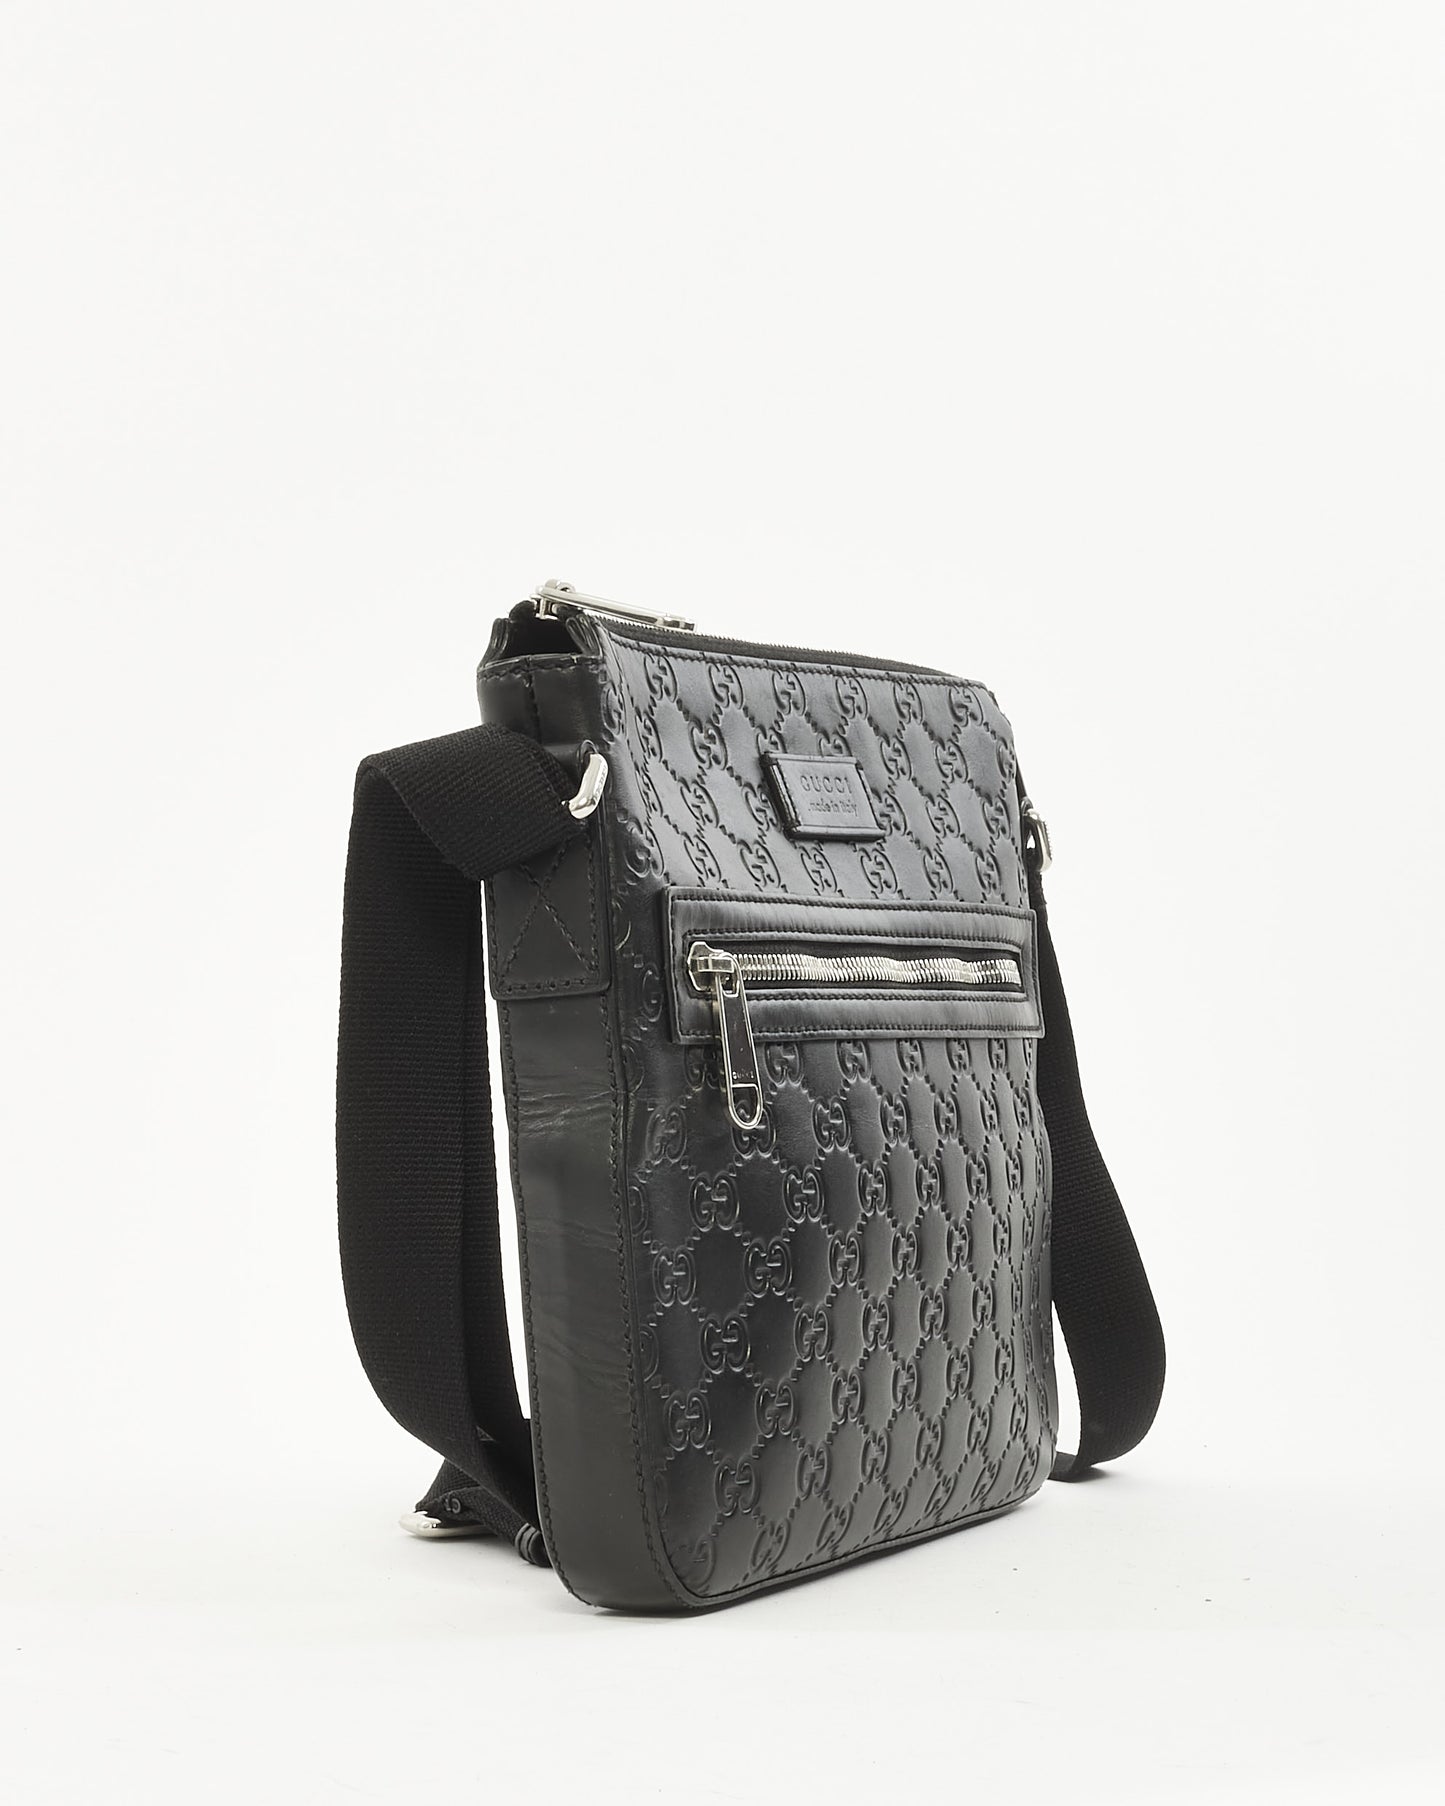 Gucci Black Signature G Leather Small Messenger Bag